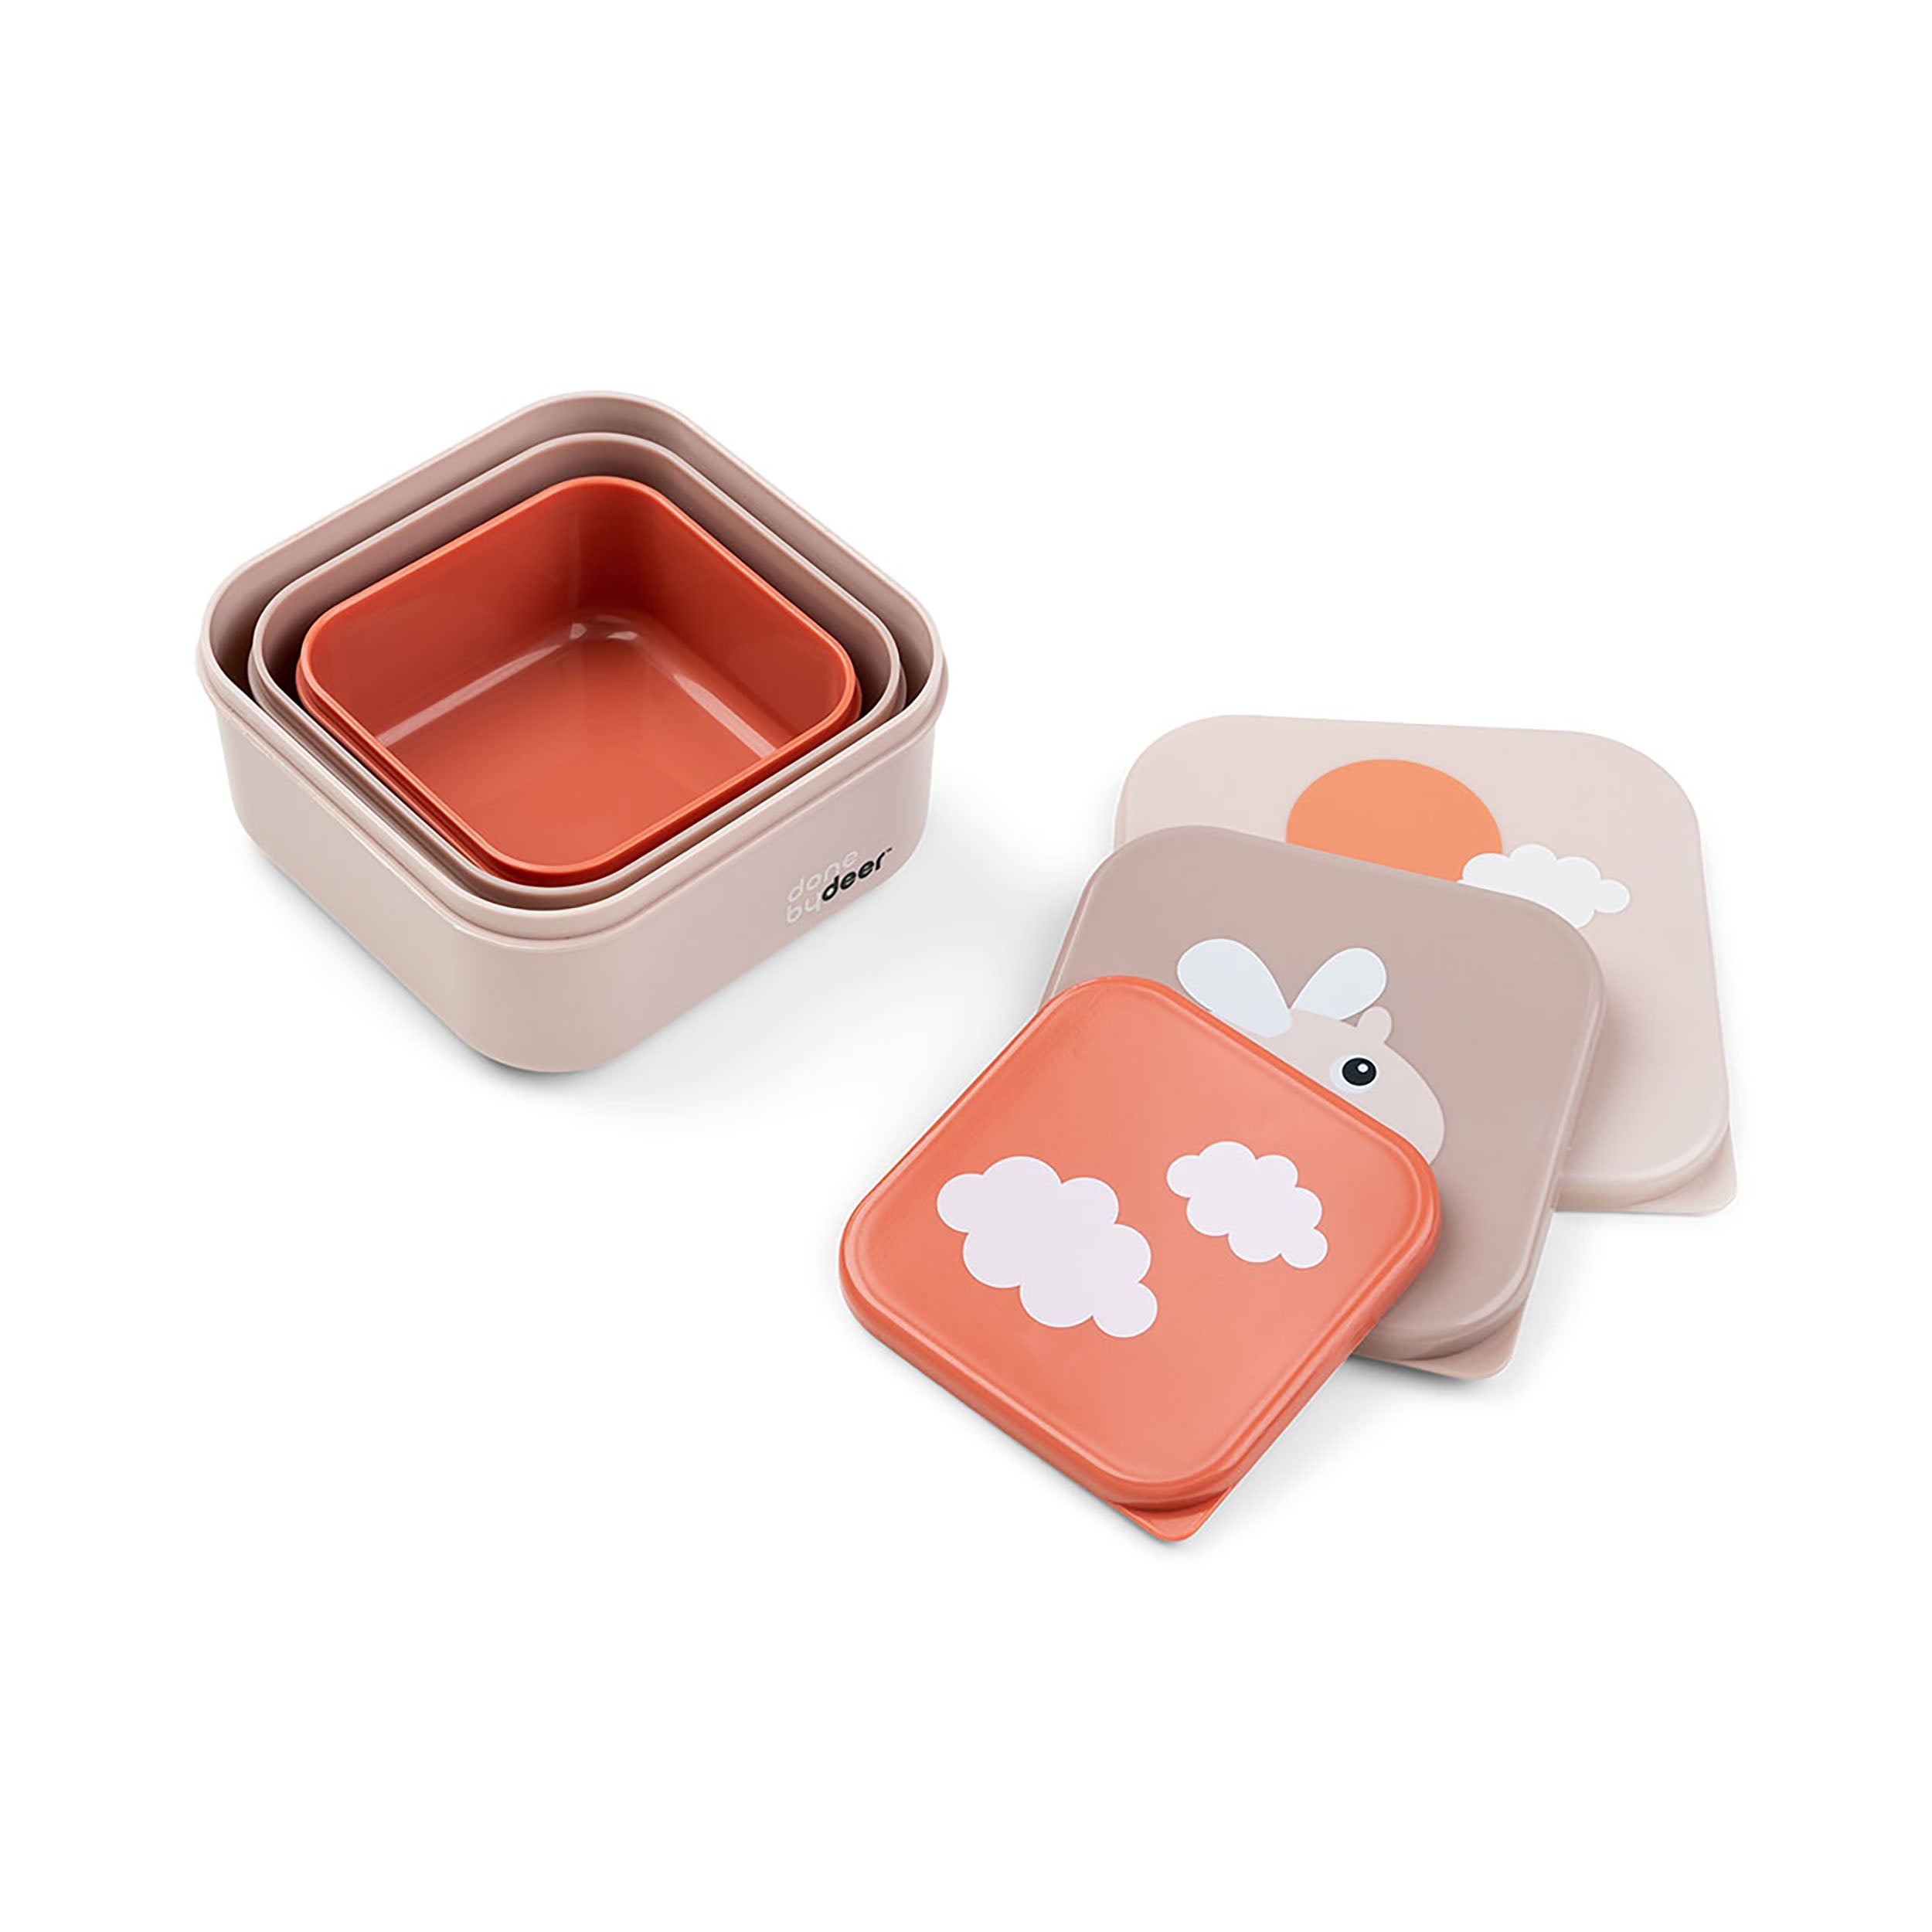 Herring & Bones - Concept Store Joyeux - Done By Deer - Boîtes à goûter - Lot de 3 boîtes à goûter